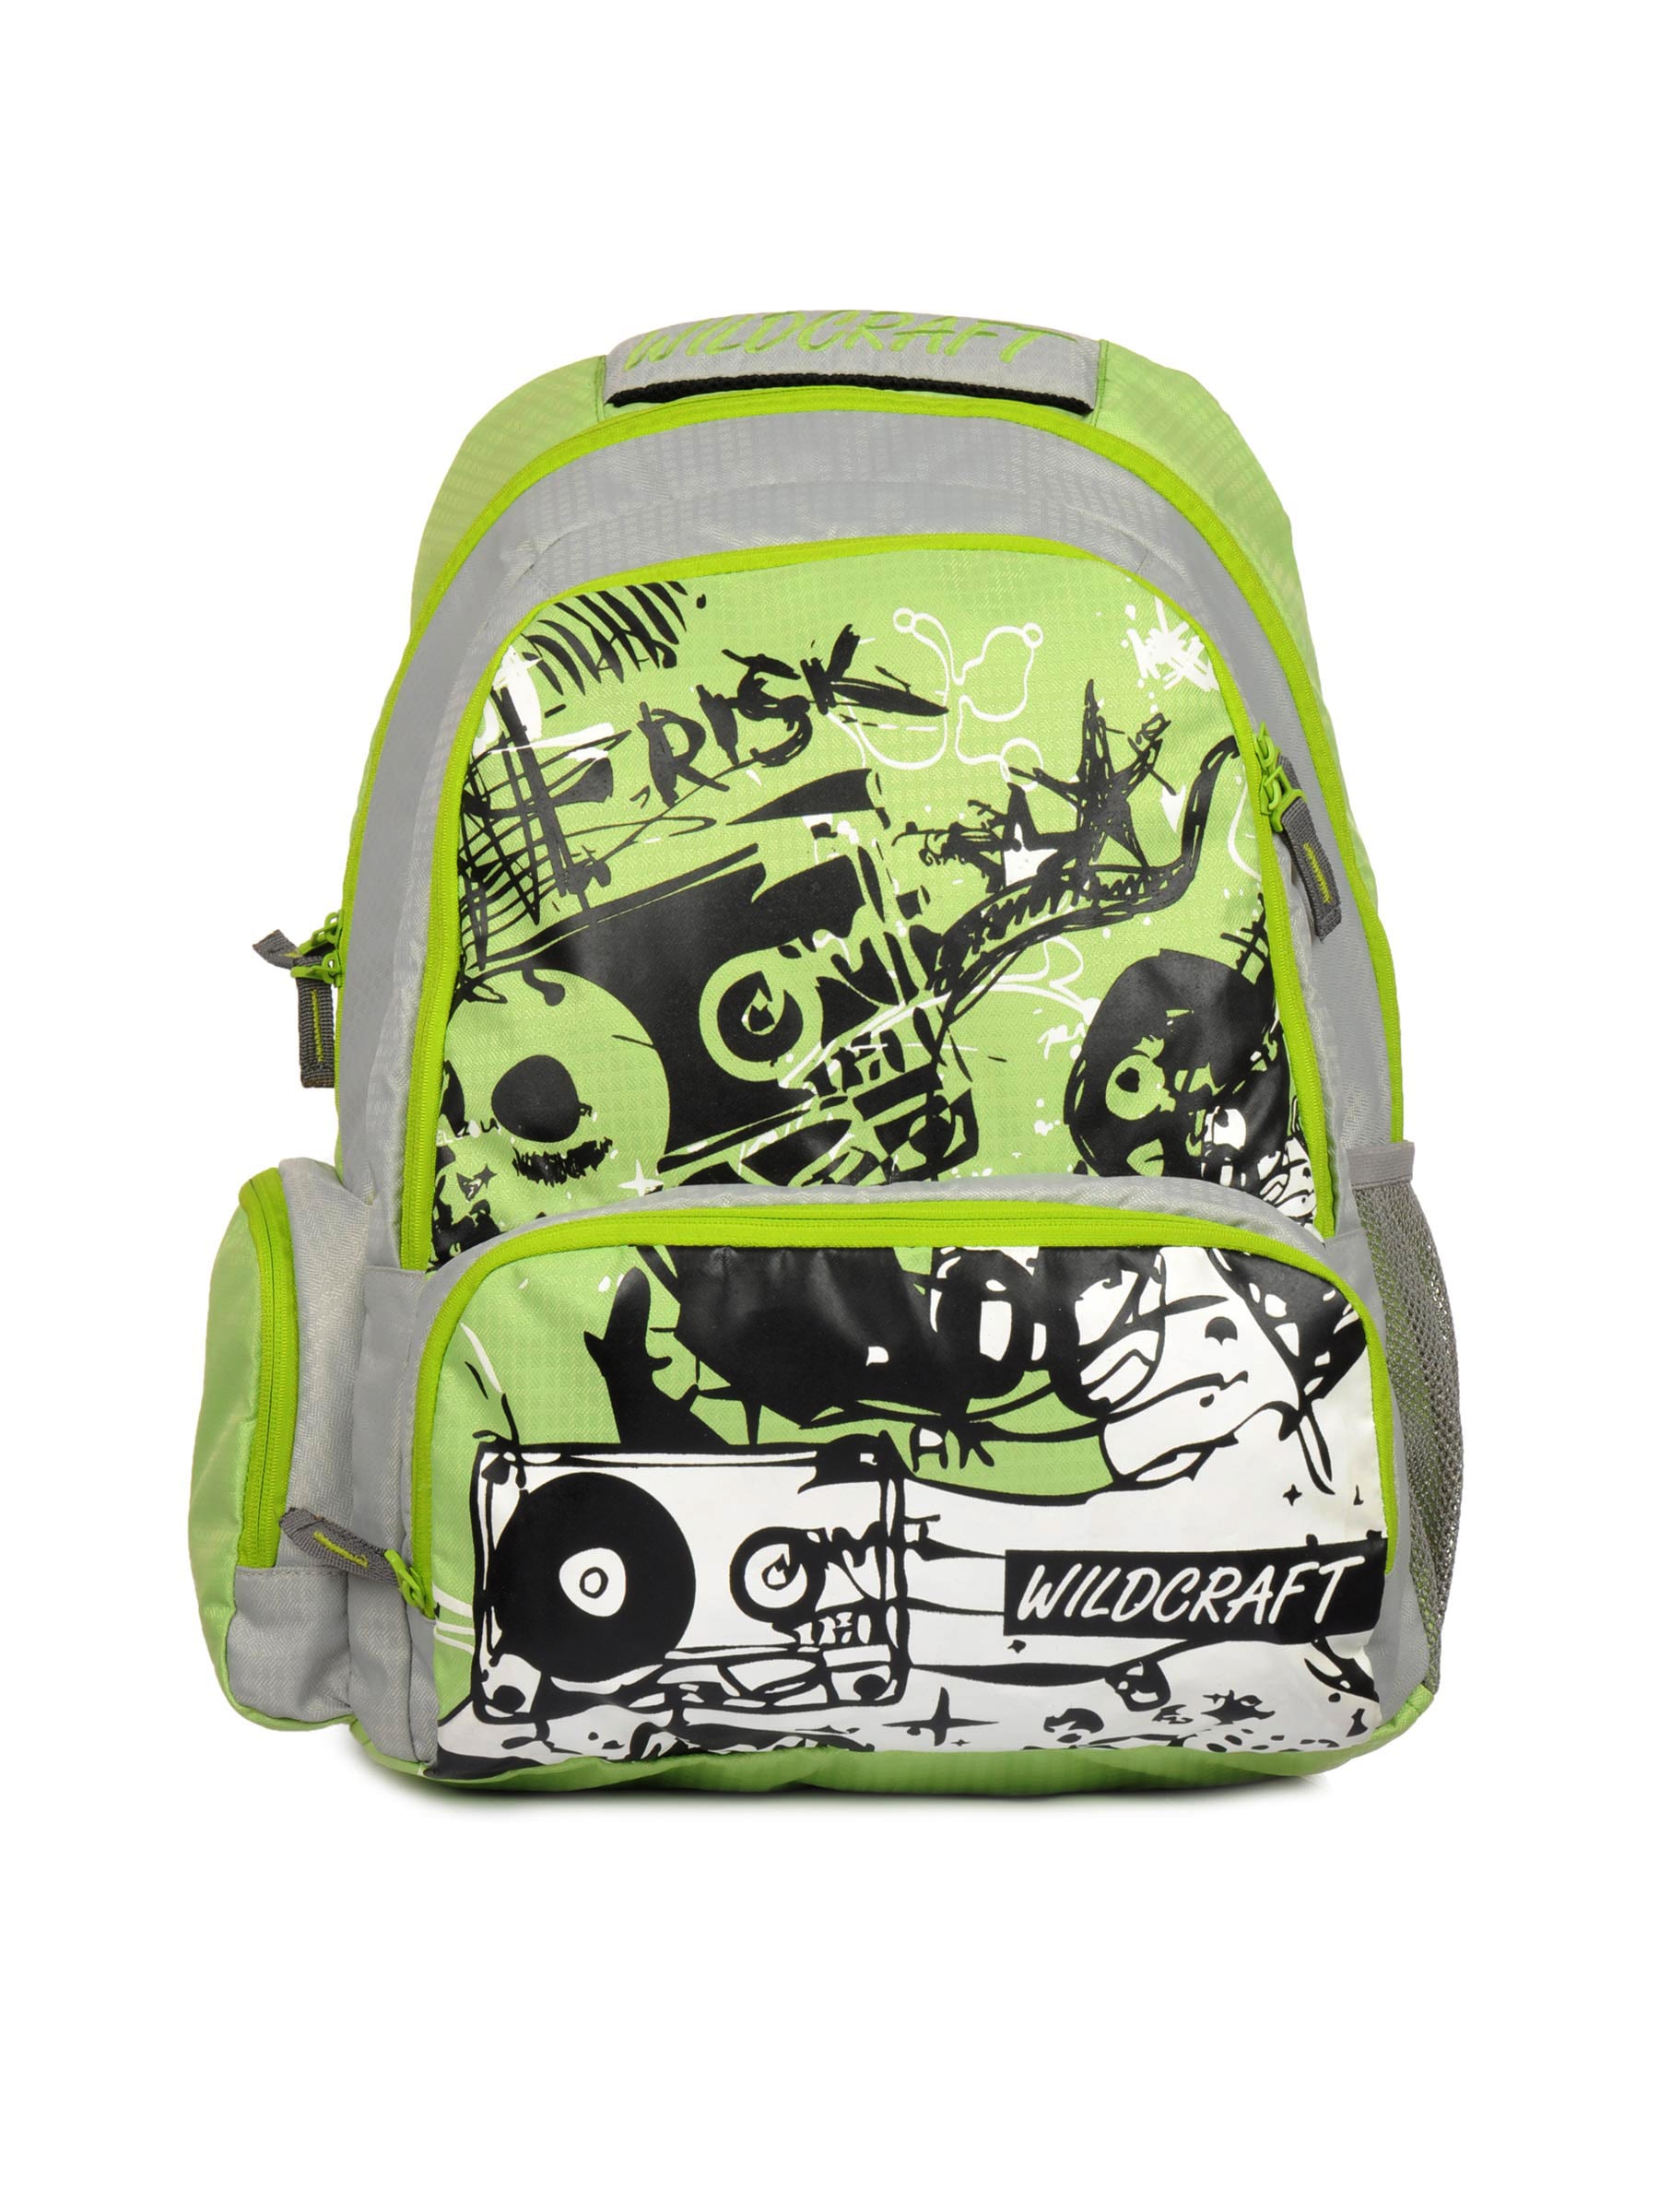 Wildcraft Unisex Outdoors Crump Green Backpack